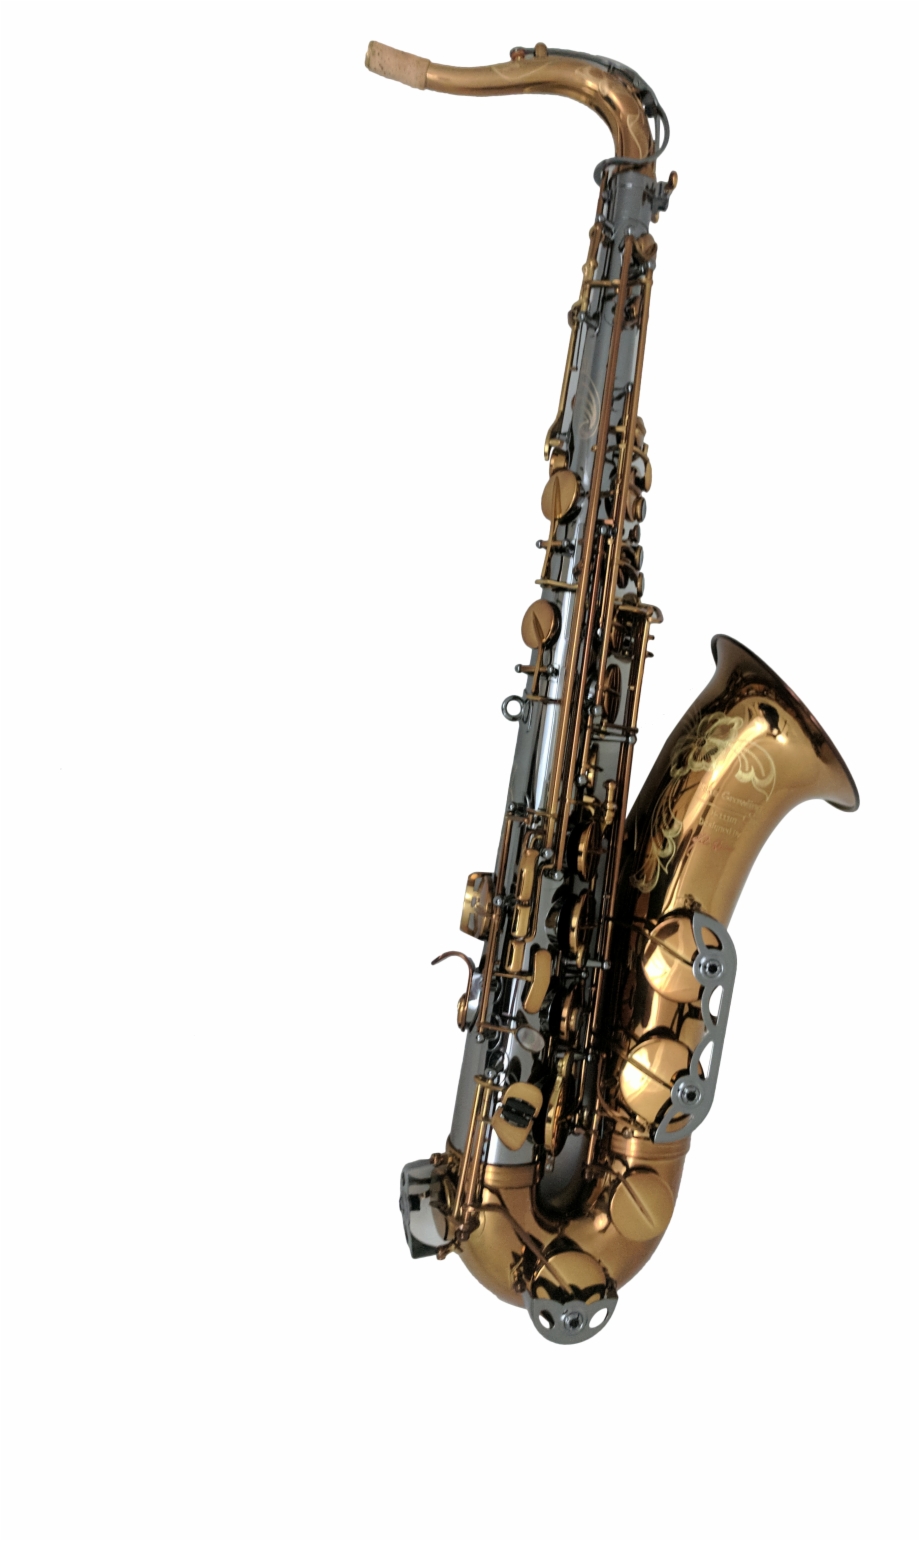 growl sax instrument
